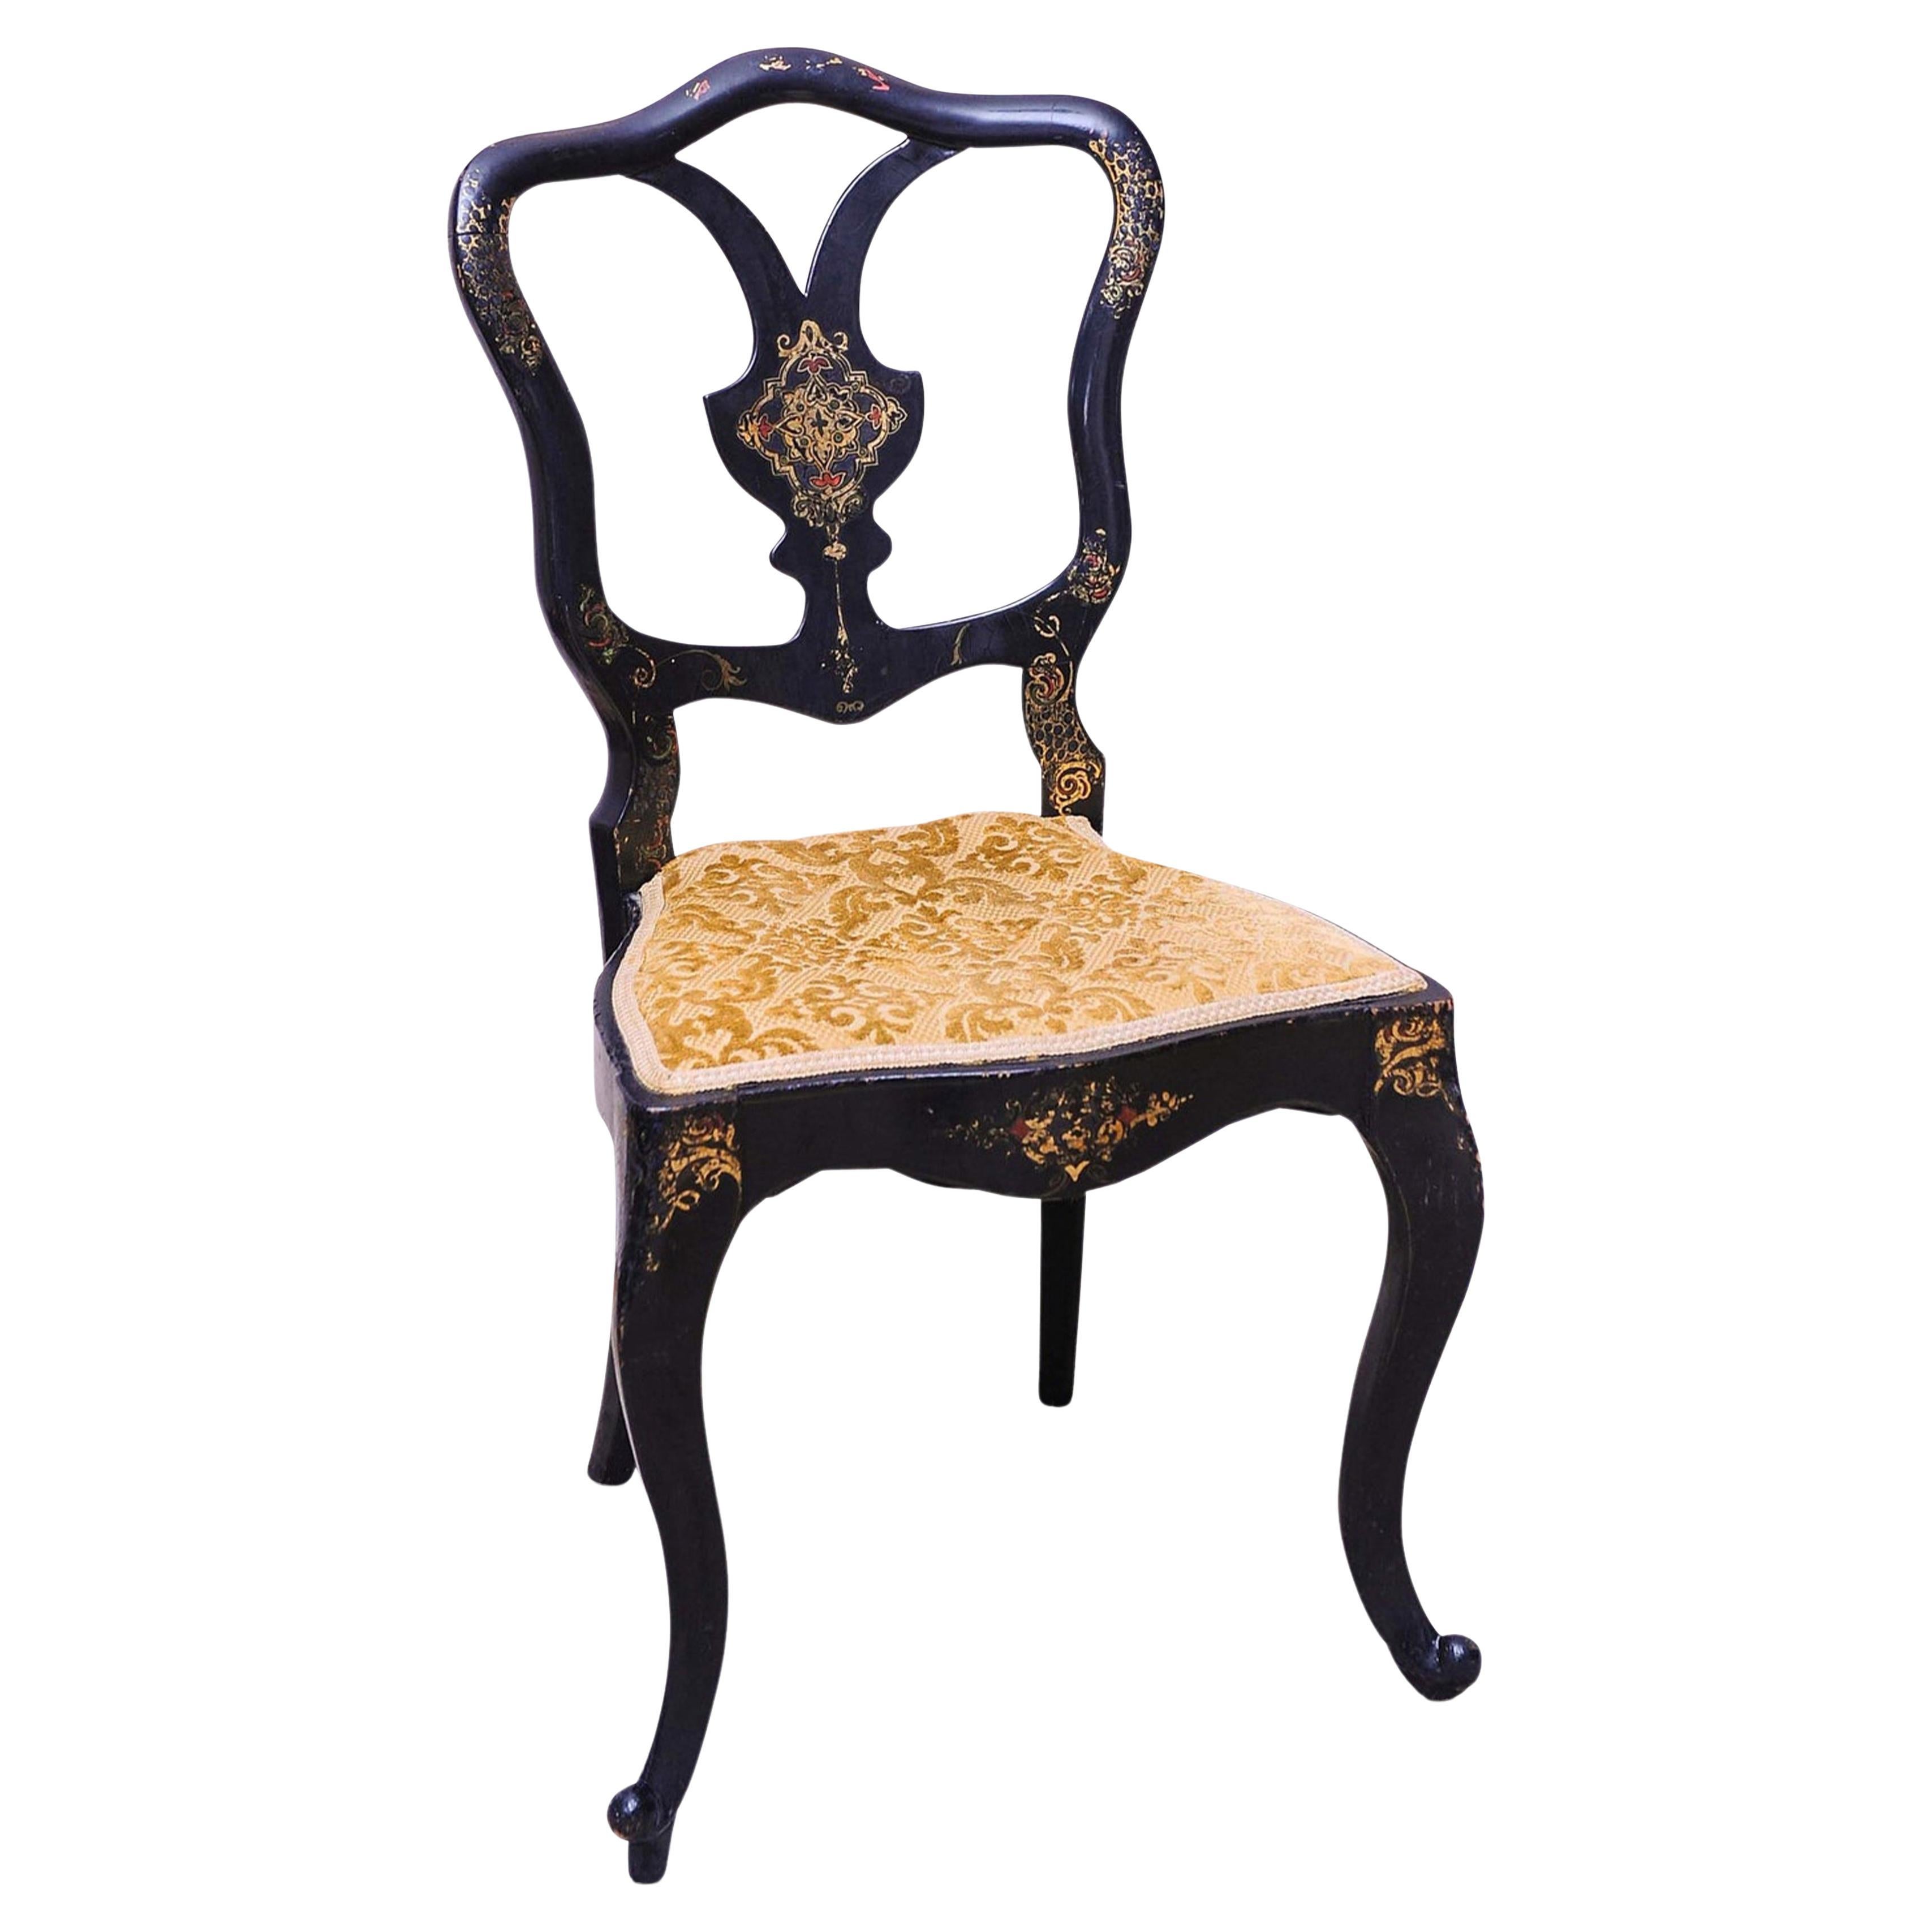 Charlotte Perriand 528 Indochine Swivel Chair in Walnut by Cassina, Mushio